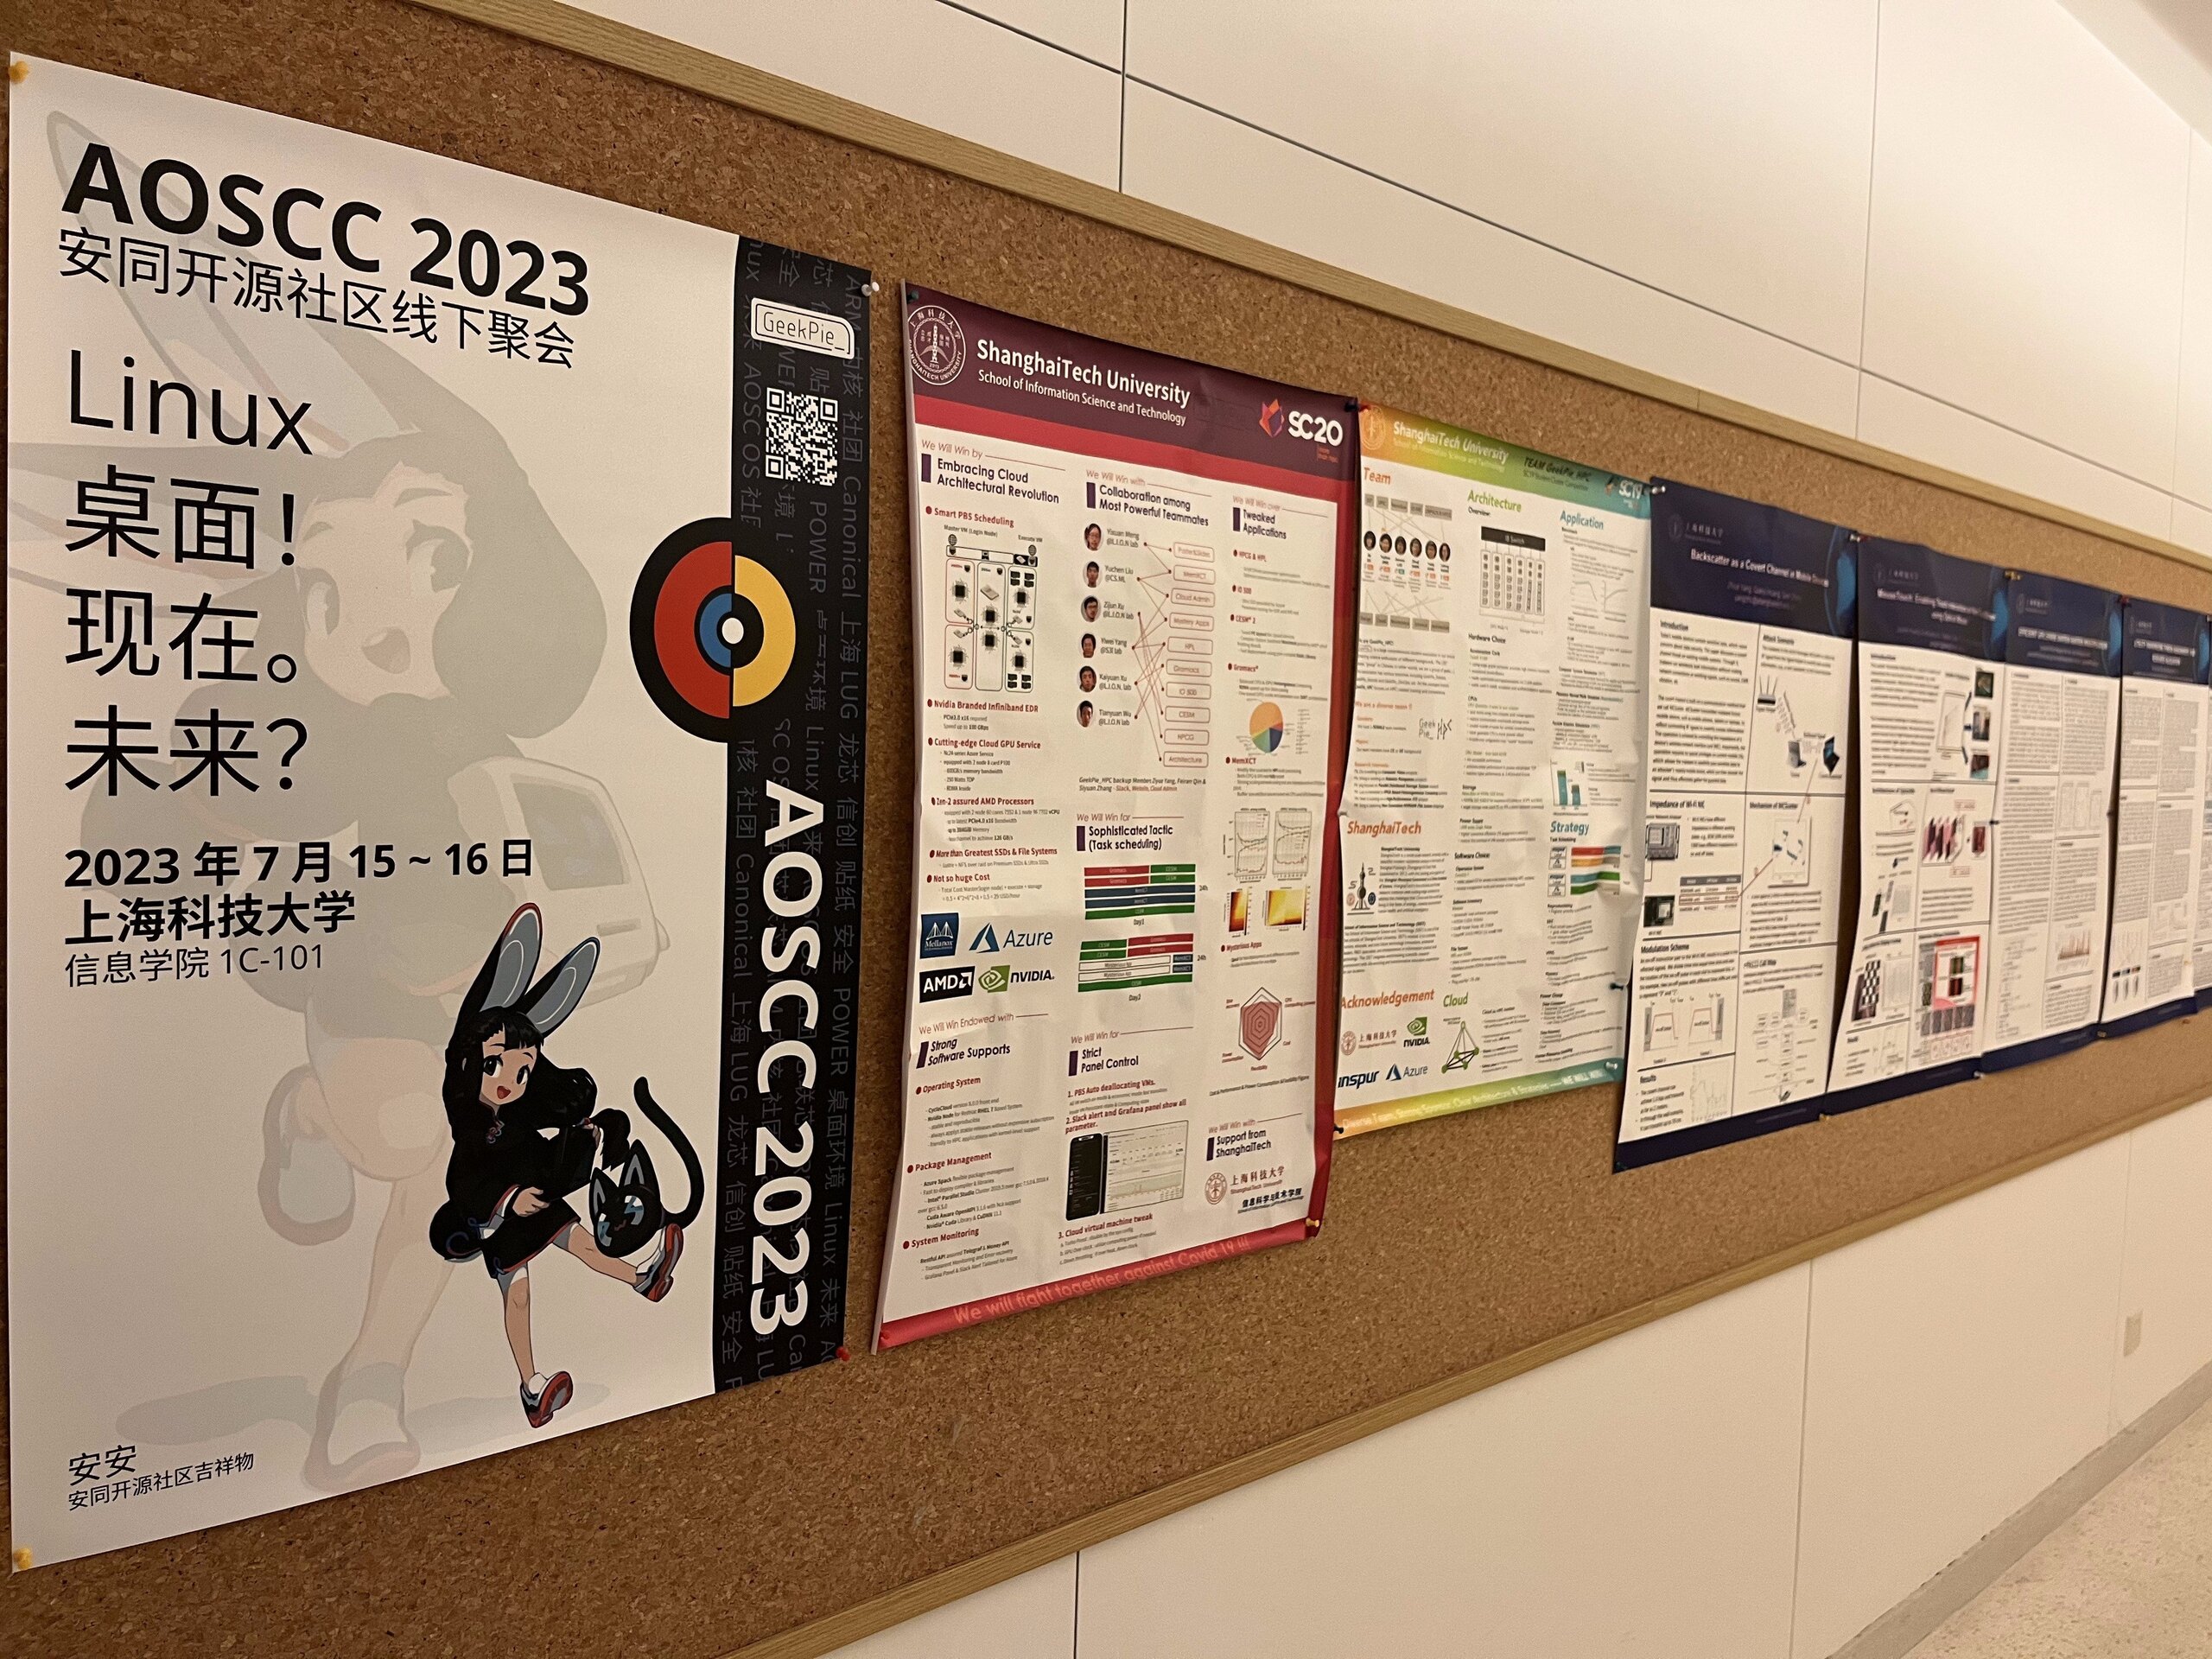 image: AOSCC 2023 Poster